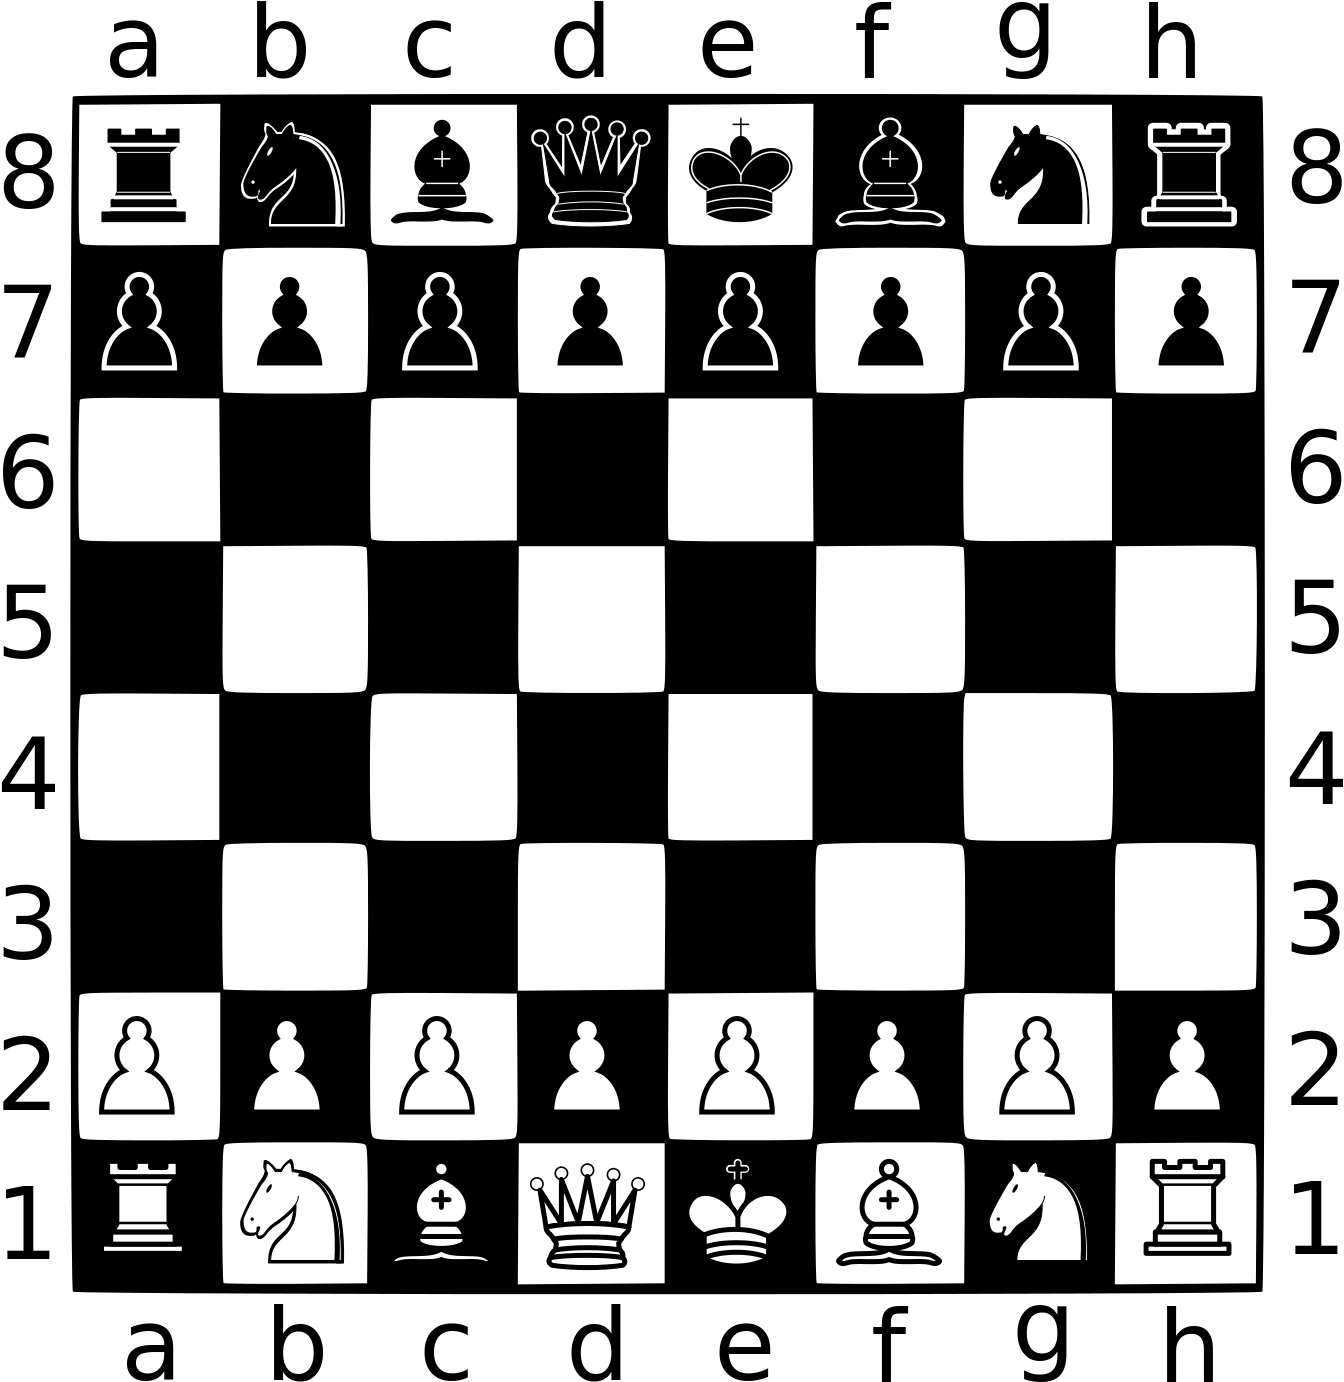 Chessboard Initial Setup PNG